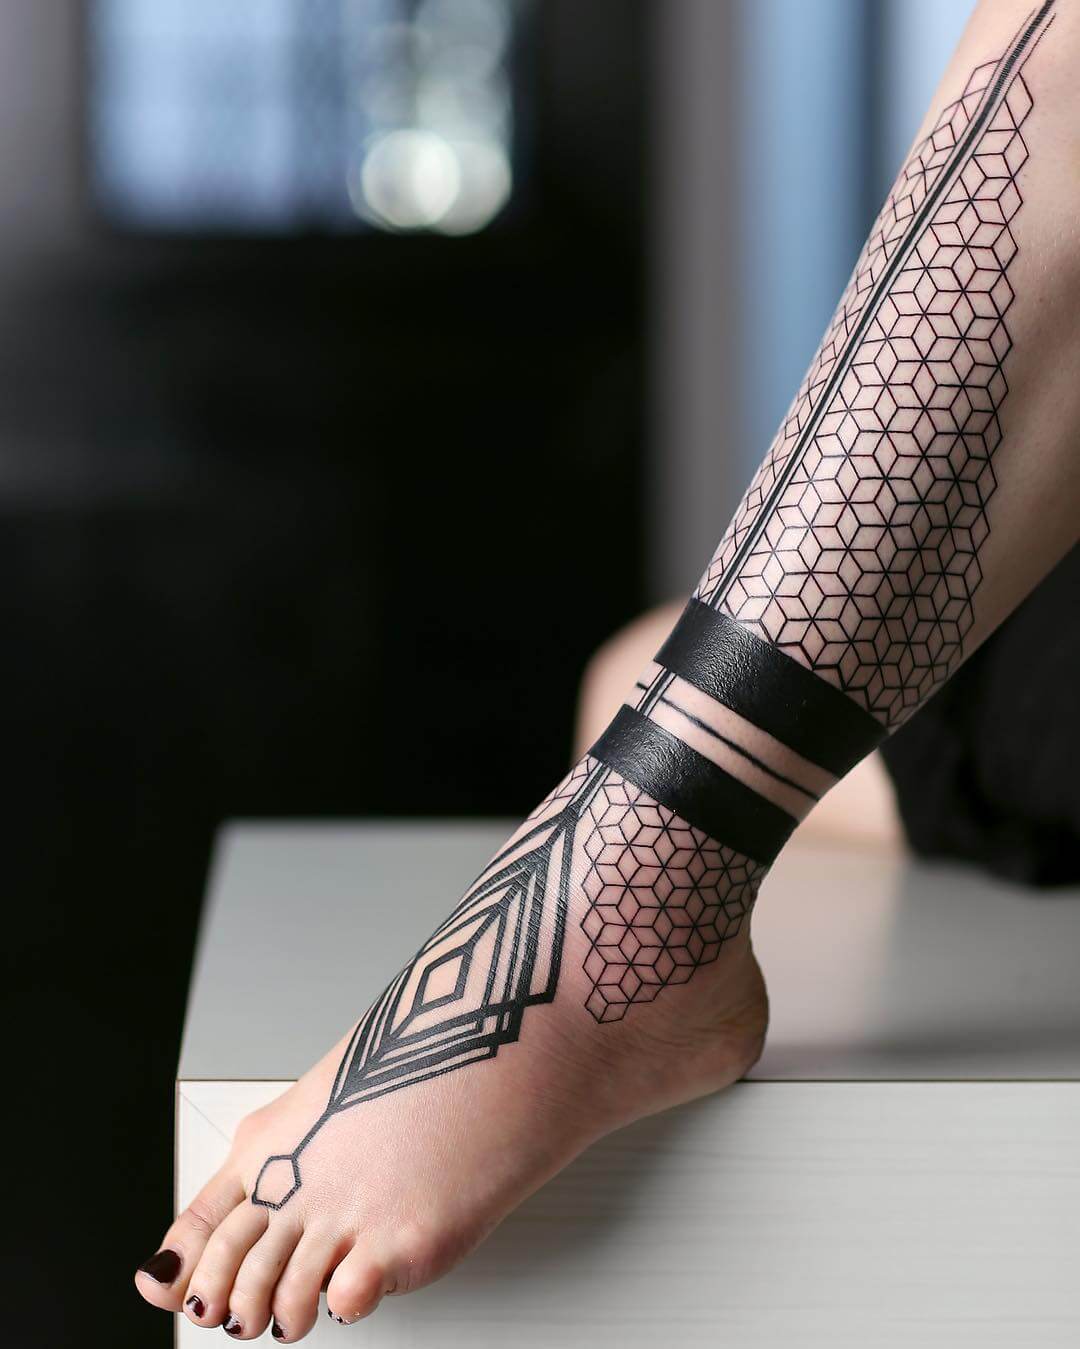 Geometric peacock feather tattoo by roxx_____